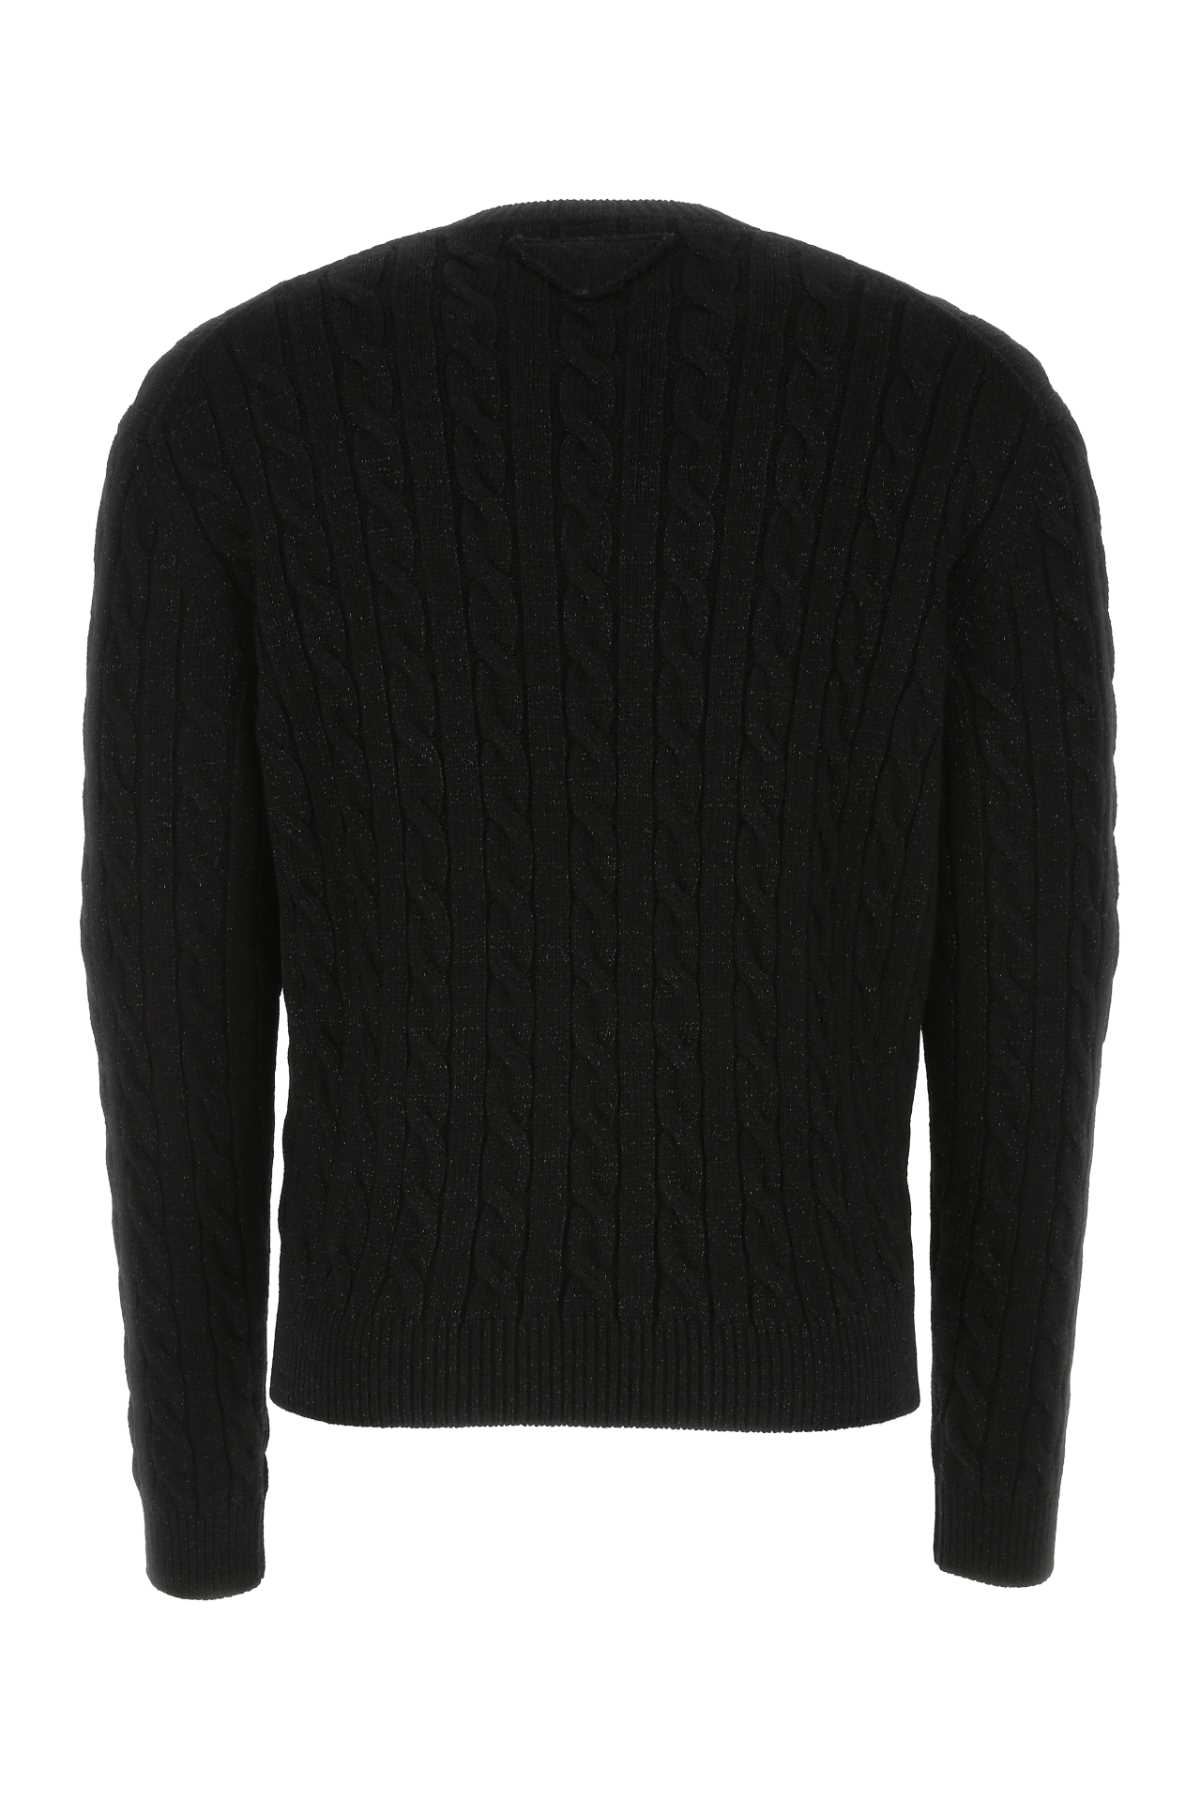 Shop Prada Black Wool Blend Sweater